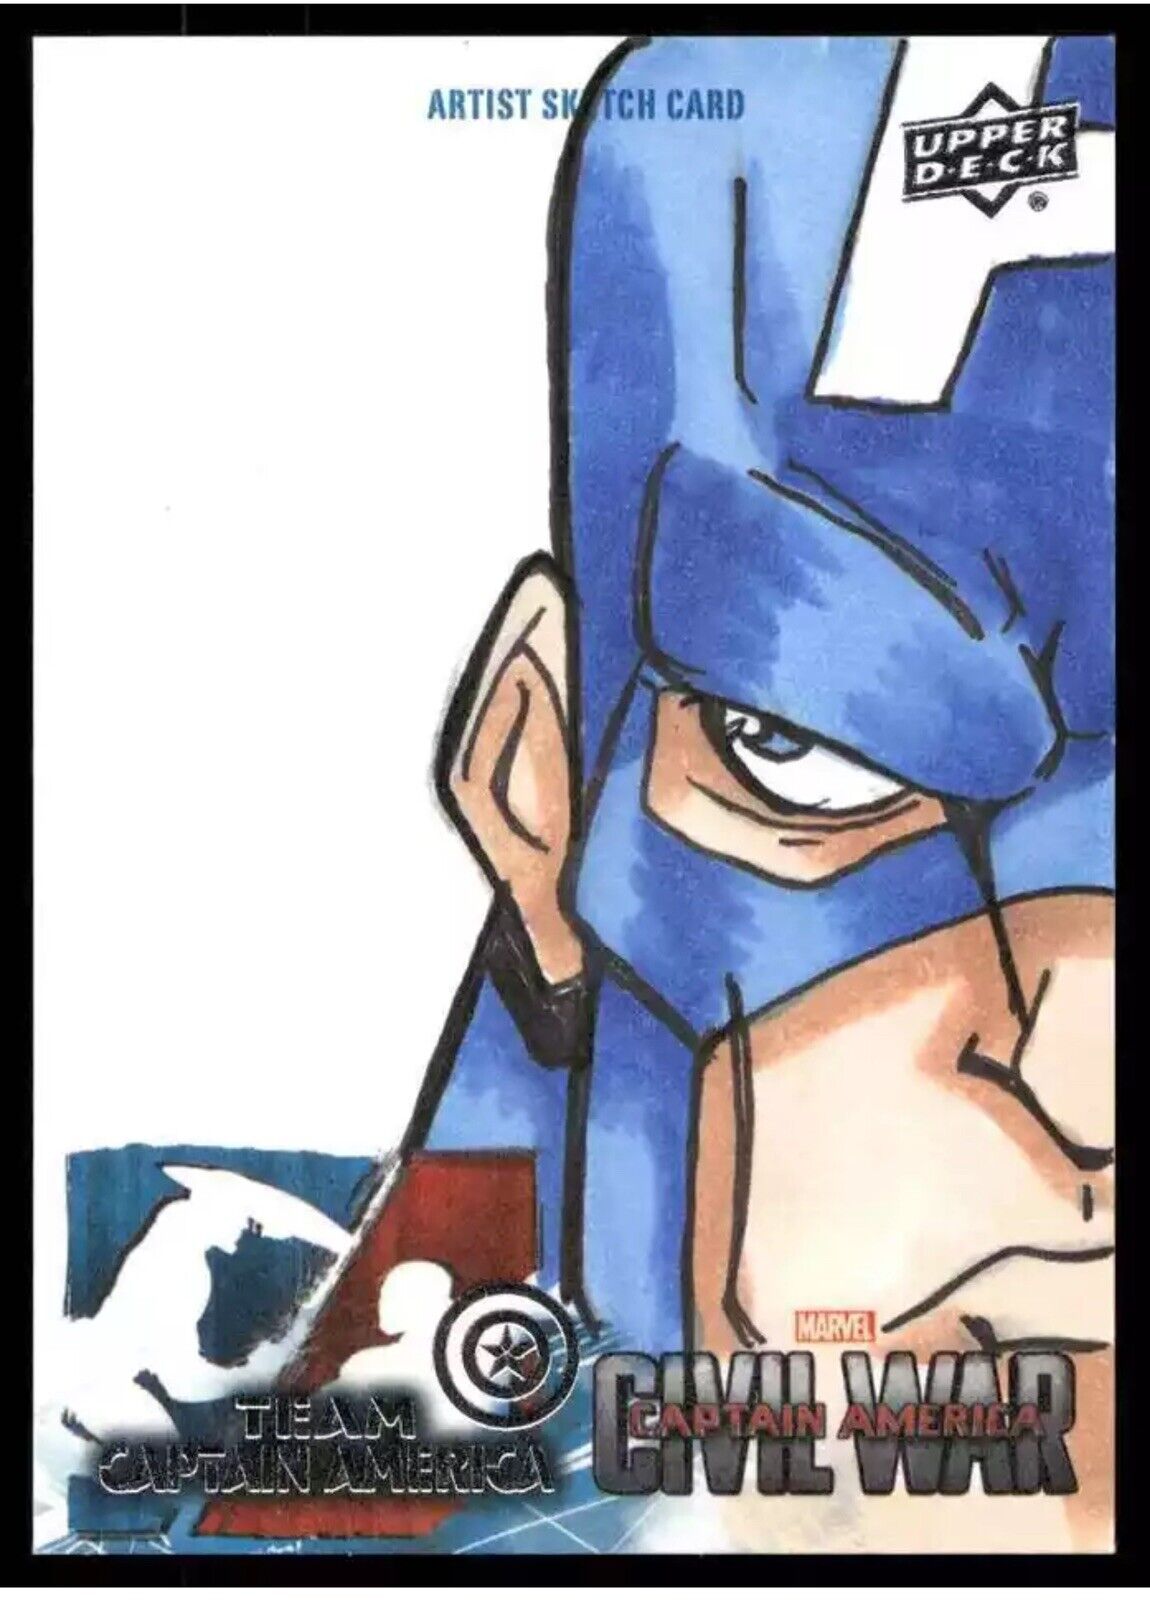 🔥2016 Upper Deck Marvel Artist Sketch Card Captain America Auto 1/1 Civil War